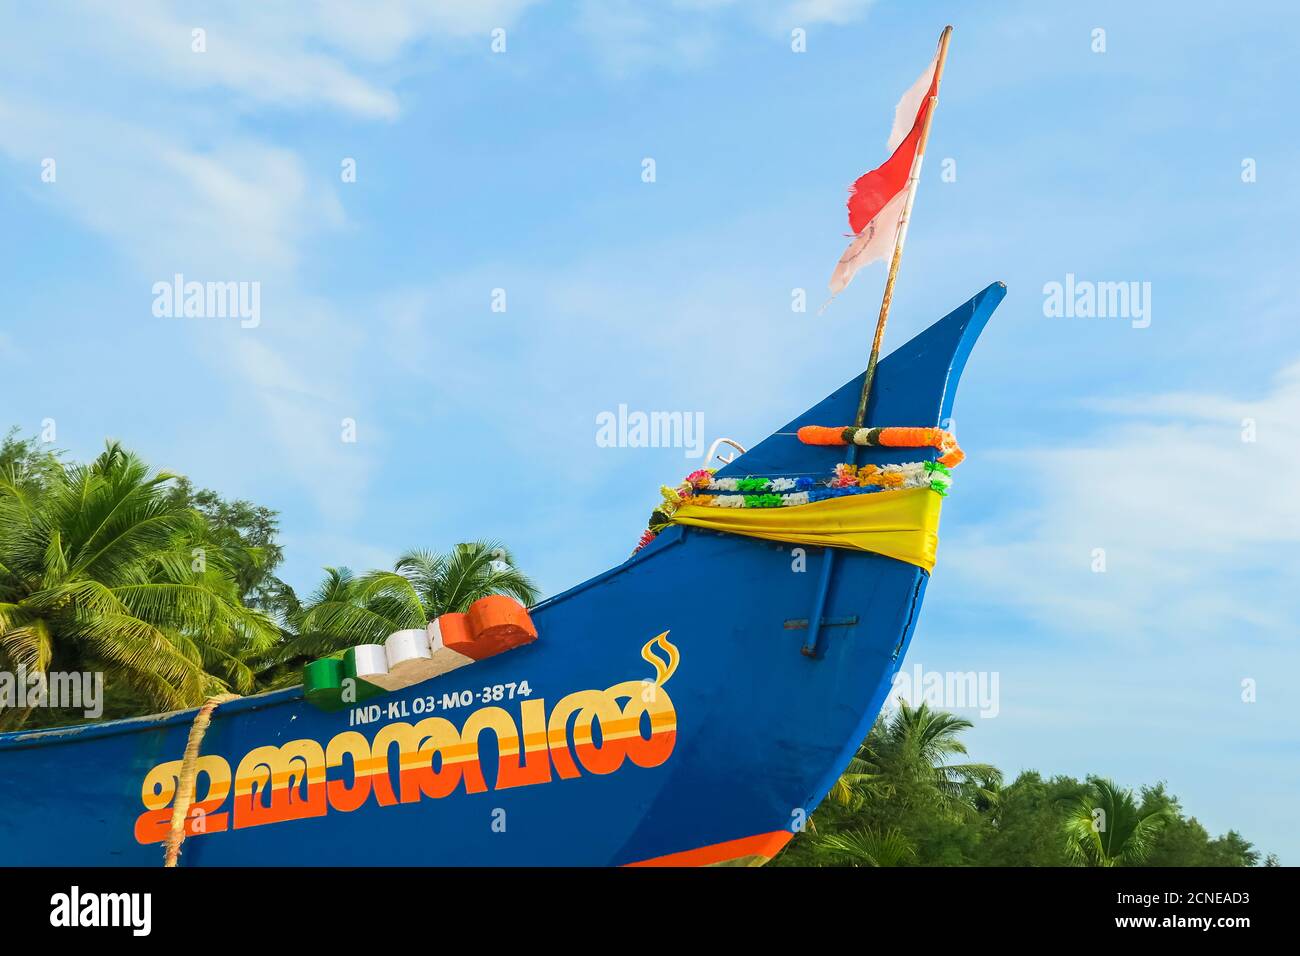 https://c8.alamy.com/comp/2CNEAD3/colourful-fishing-boat-decorated-with-indian-flag-motif-on-marari-beach-mararikulam-alappuzha-alleppey-kerala-india-asia-2CNEAD3.jpg